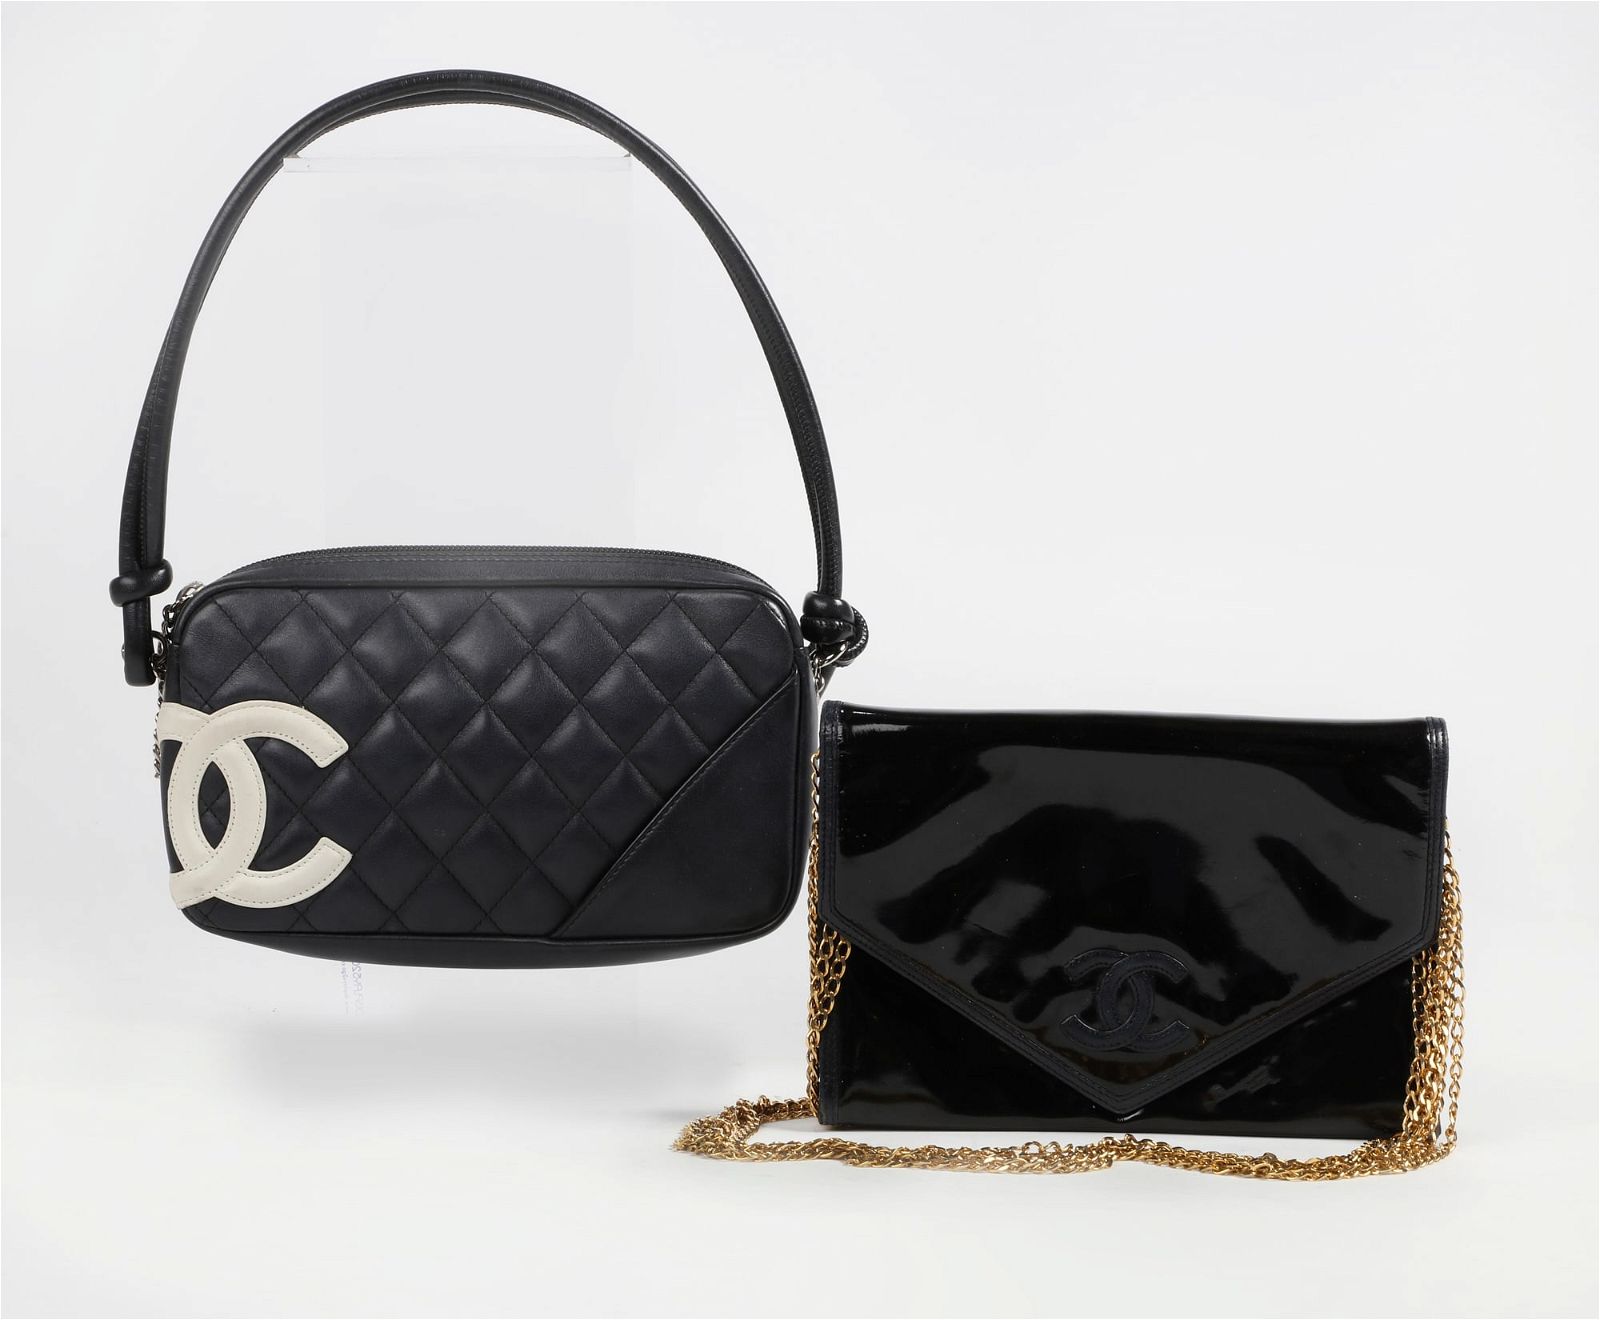 TWO CHANEL HANDBAGSTwo Chanel handbagsComprising